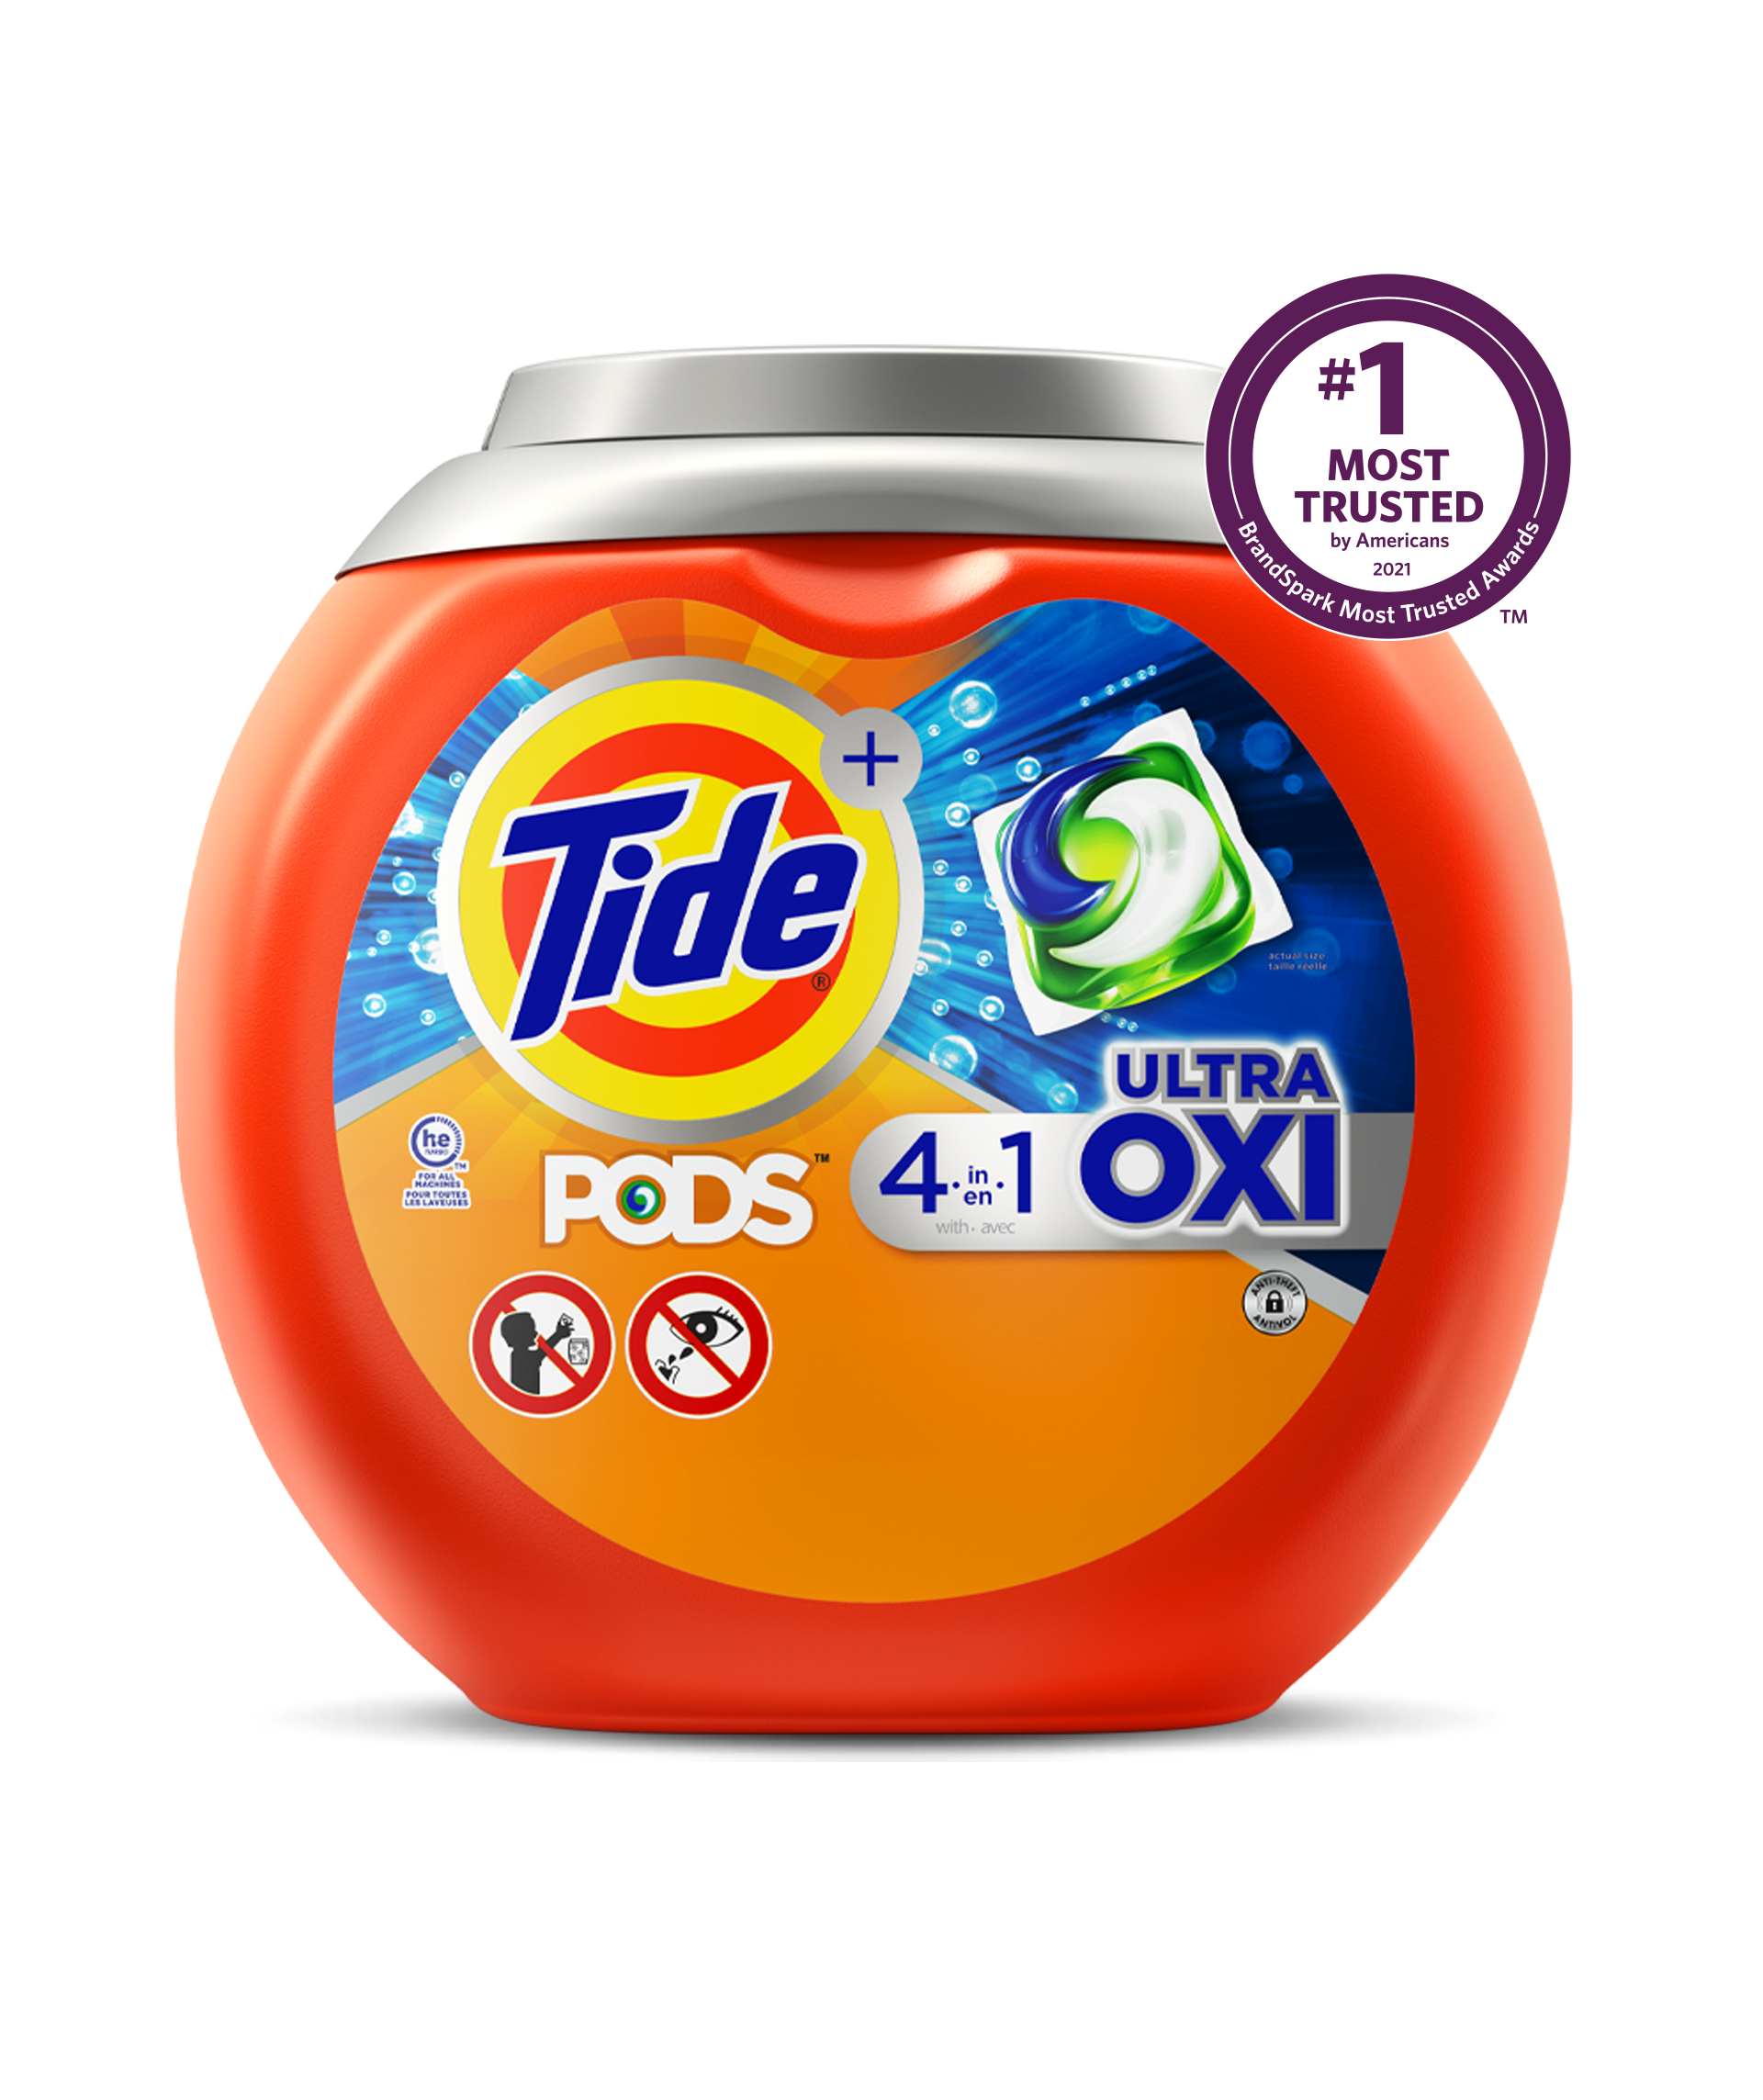 Tide PODS® Ultra OXI Laundry Detergent - 61 count, color orange